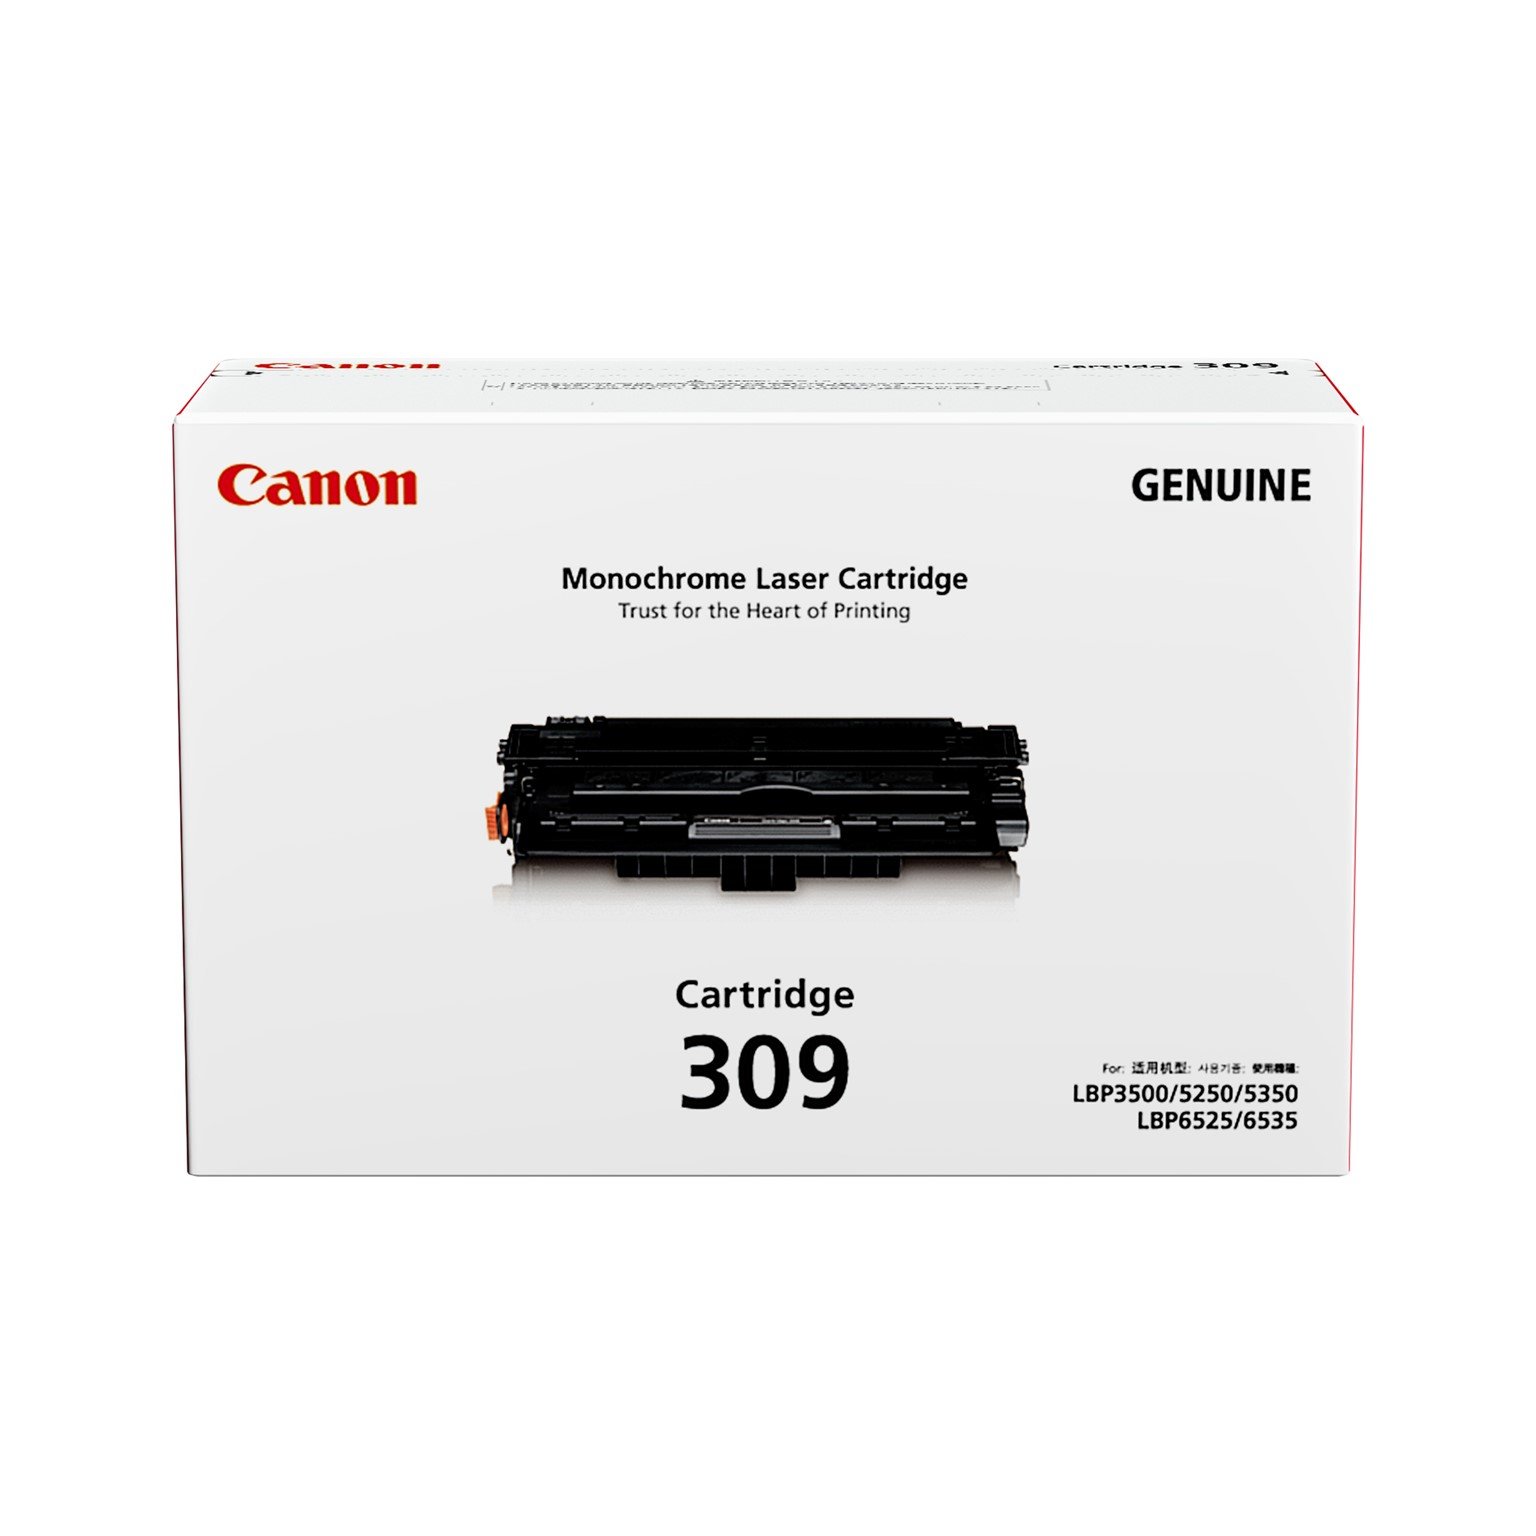 Canon Cartridge-309 Black